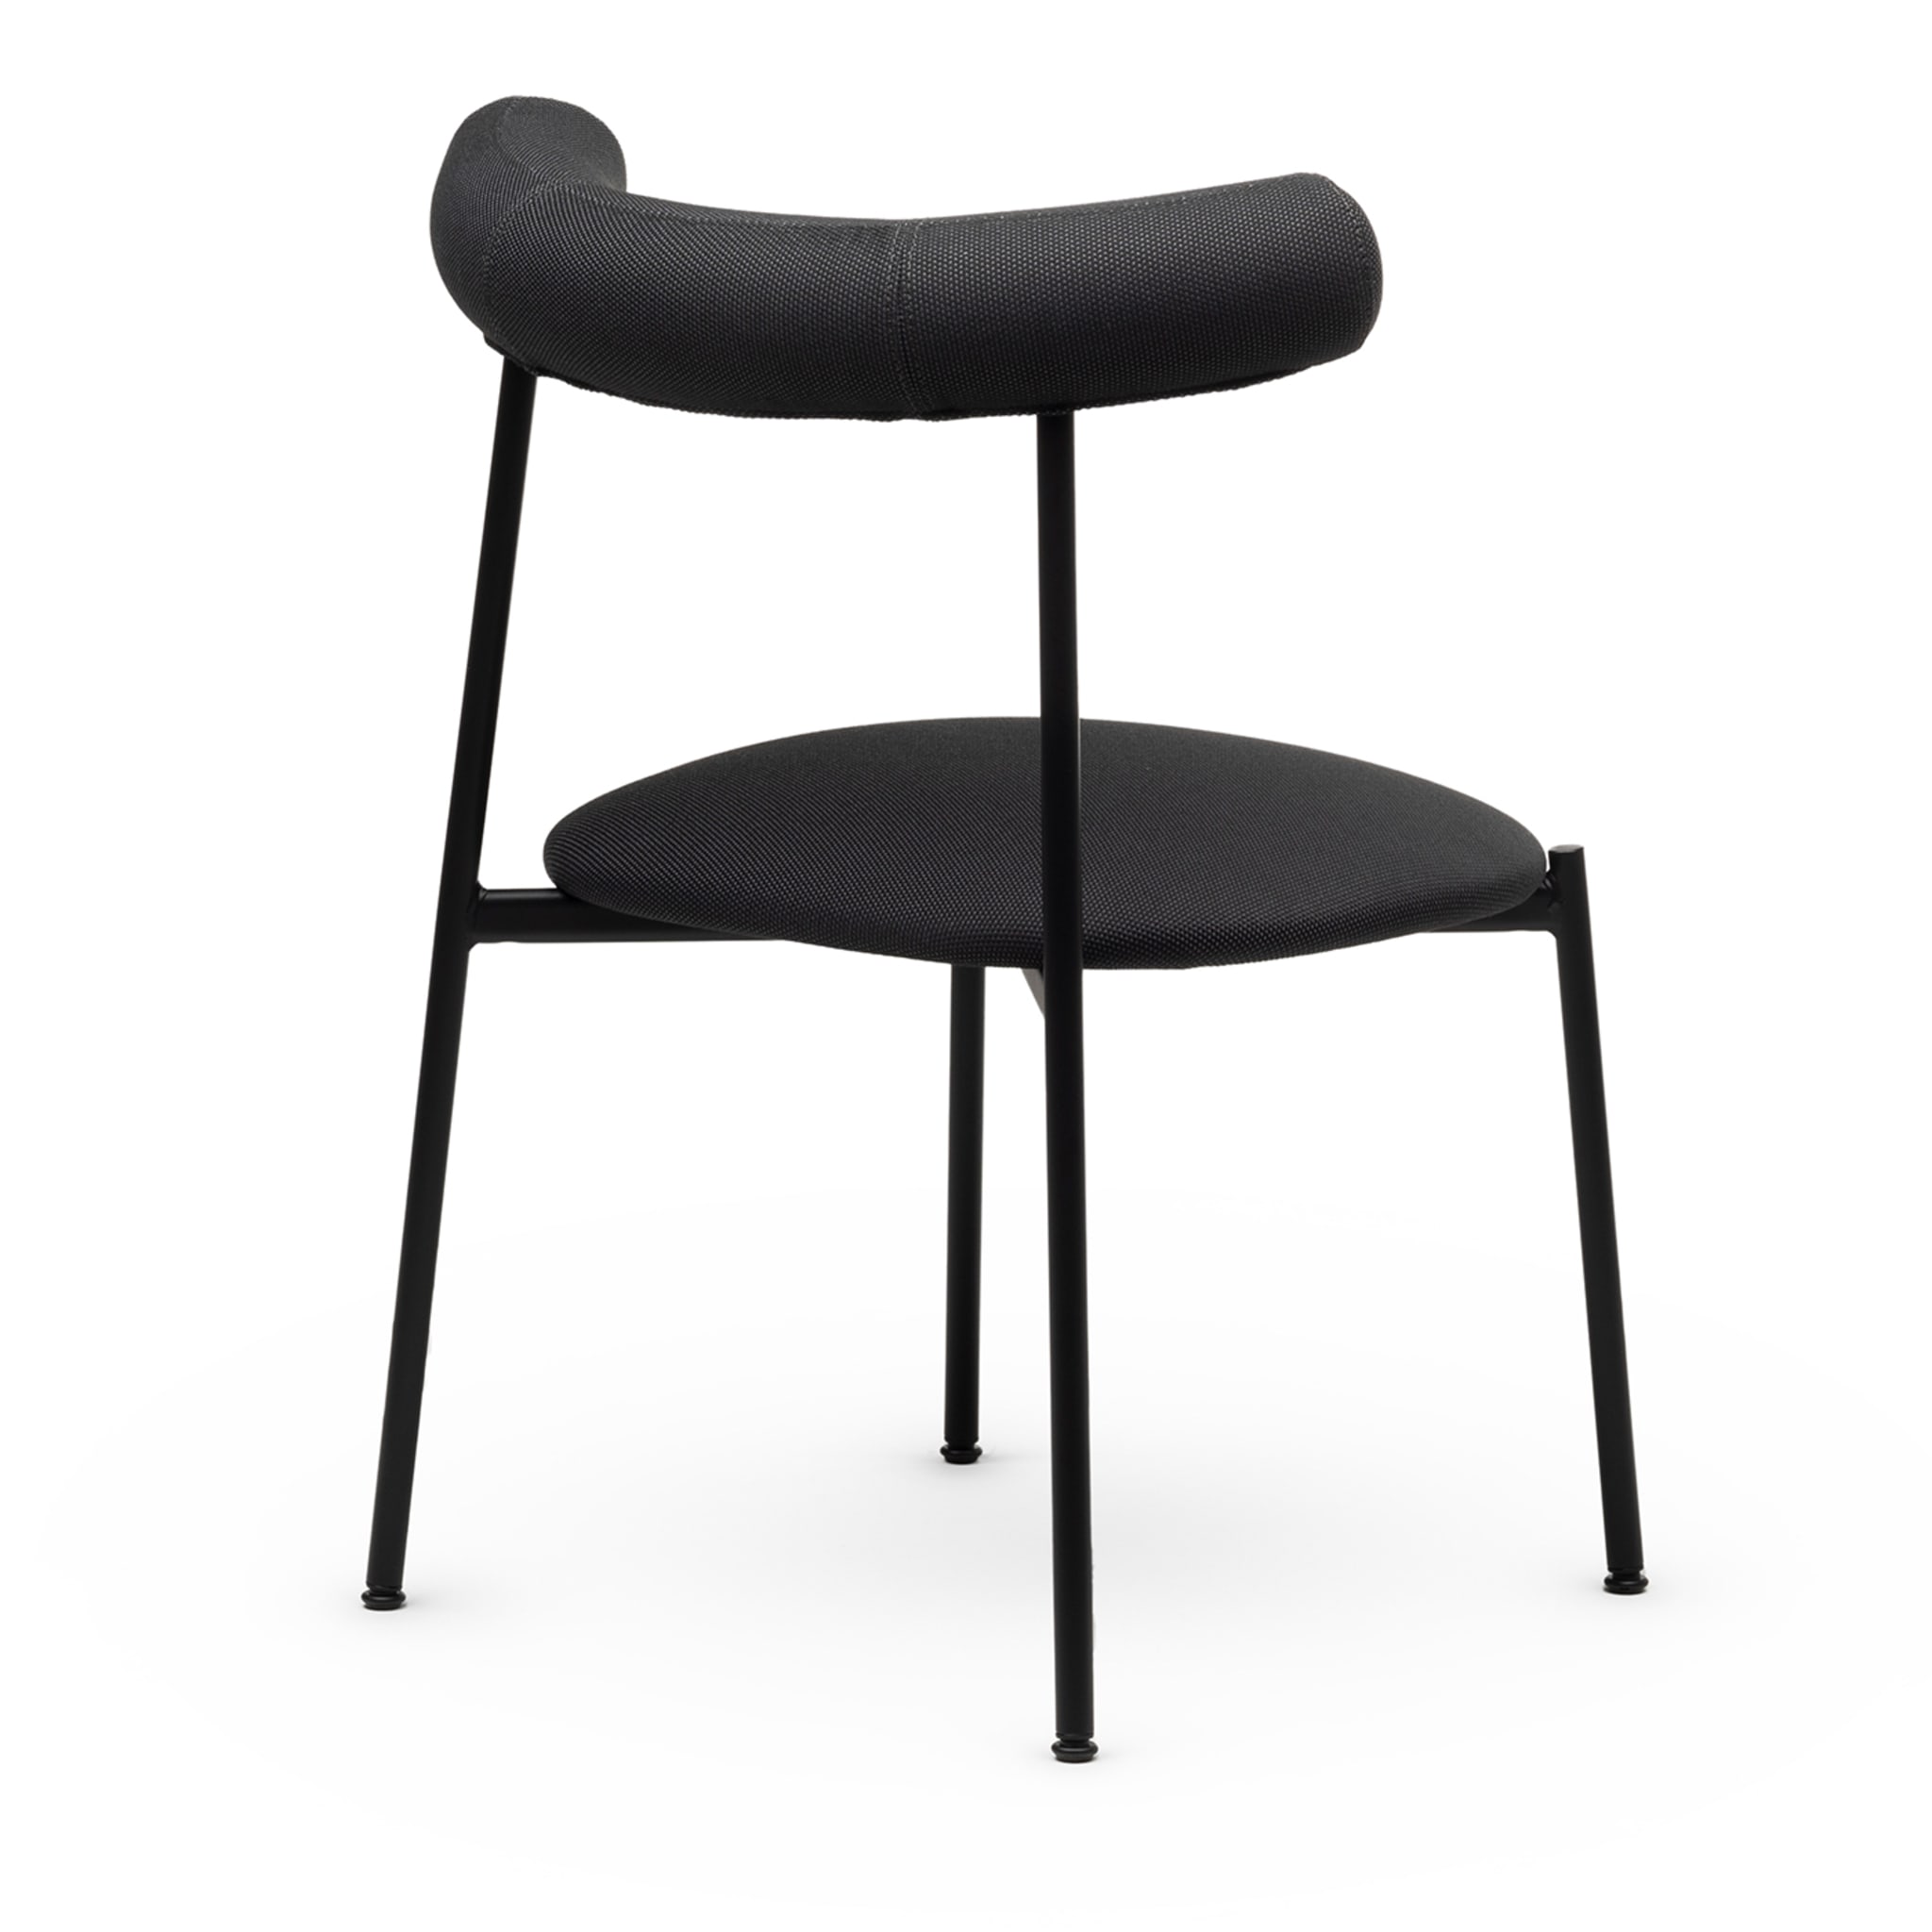 Pampa S Black Chair by Studio Pastina - Alternative view 2